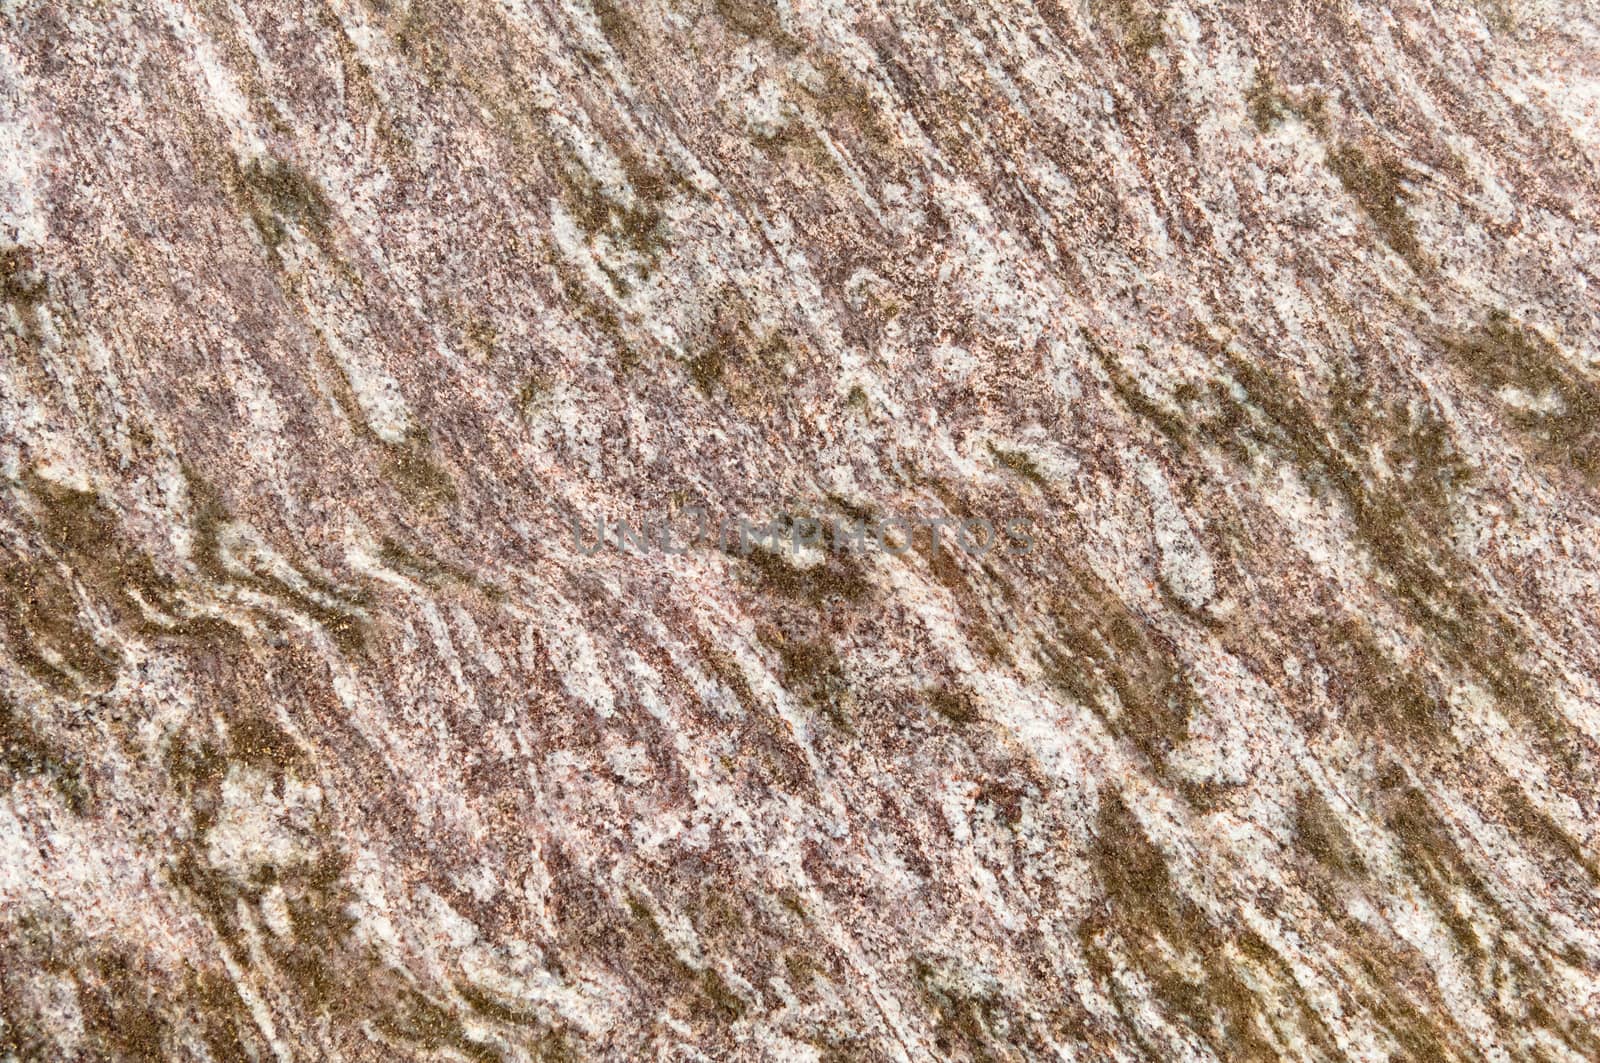 Seamless granite textured background by horizonphoto